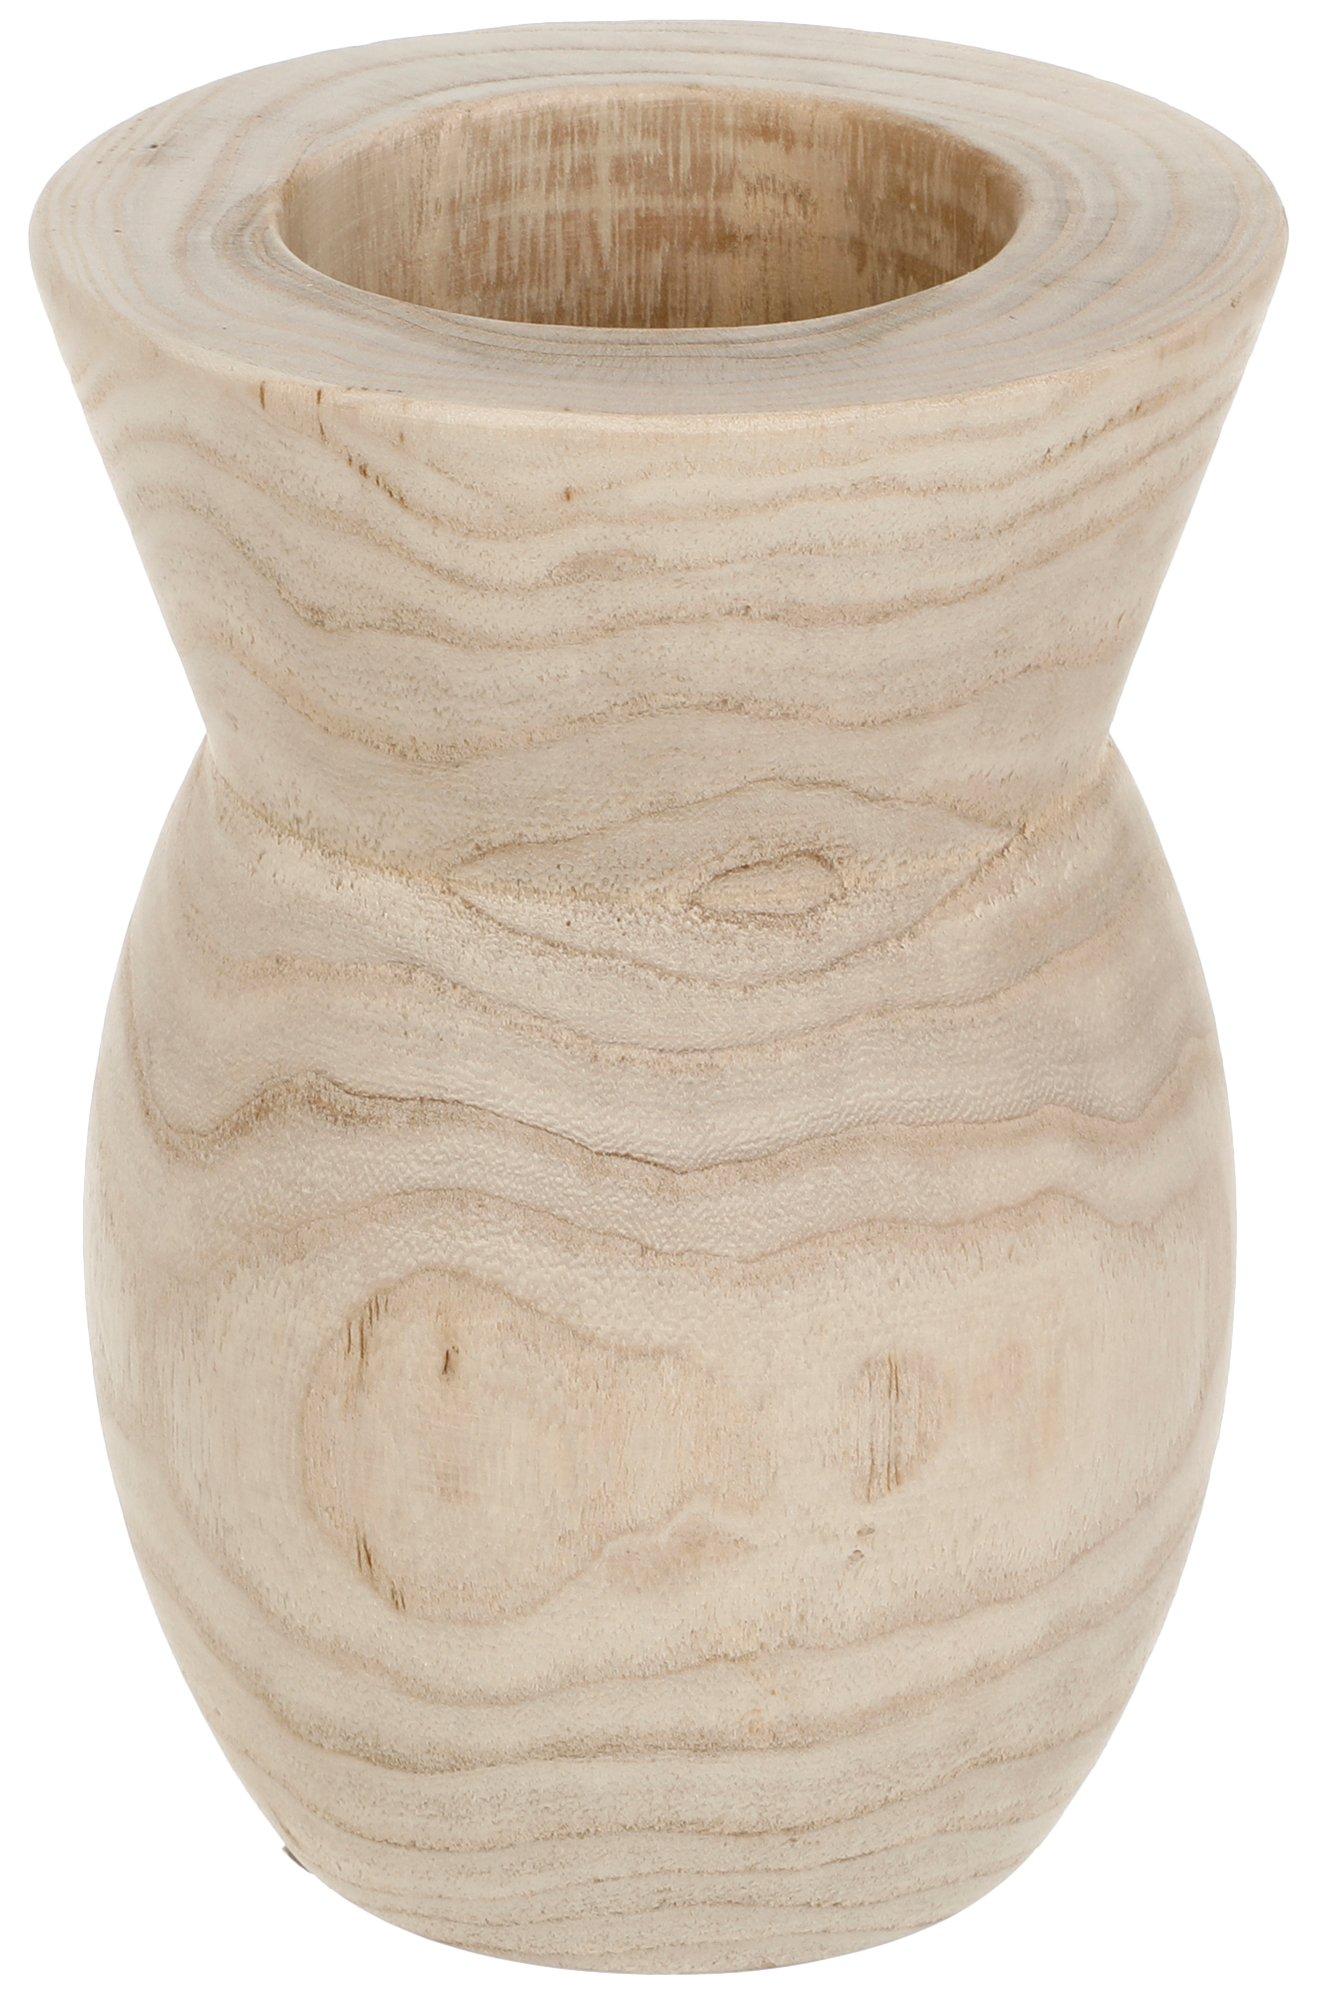 10x7 Wooden Vase